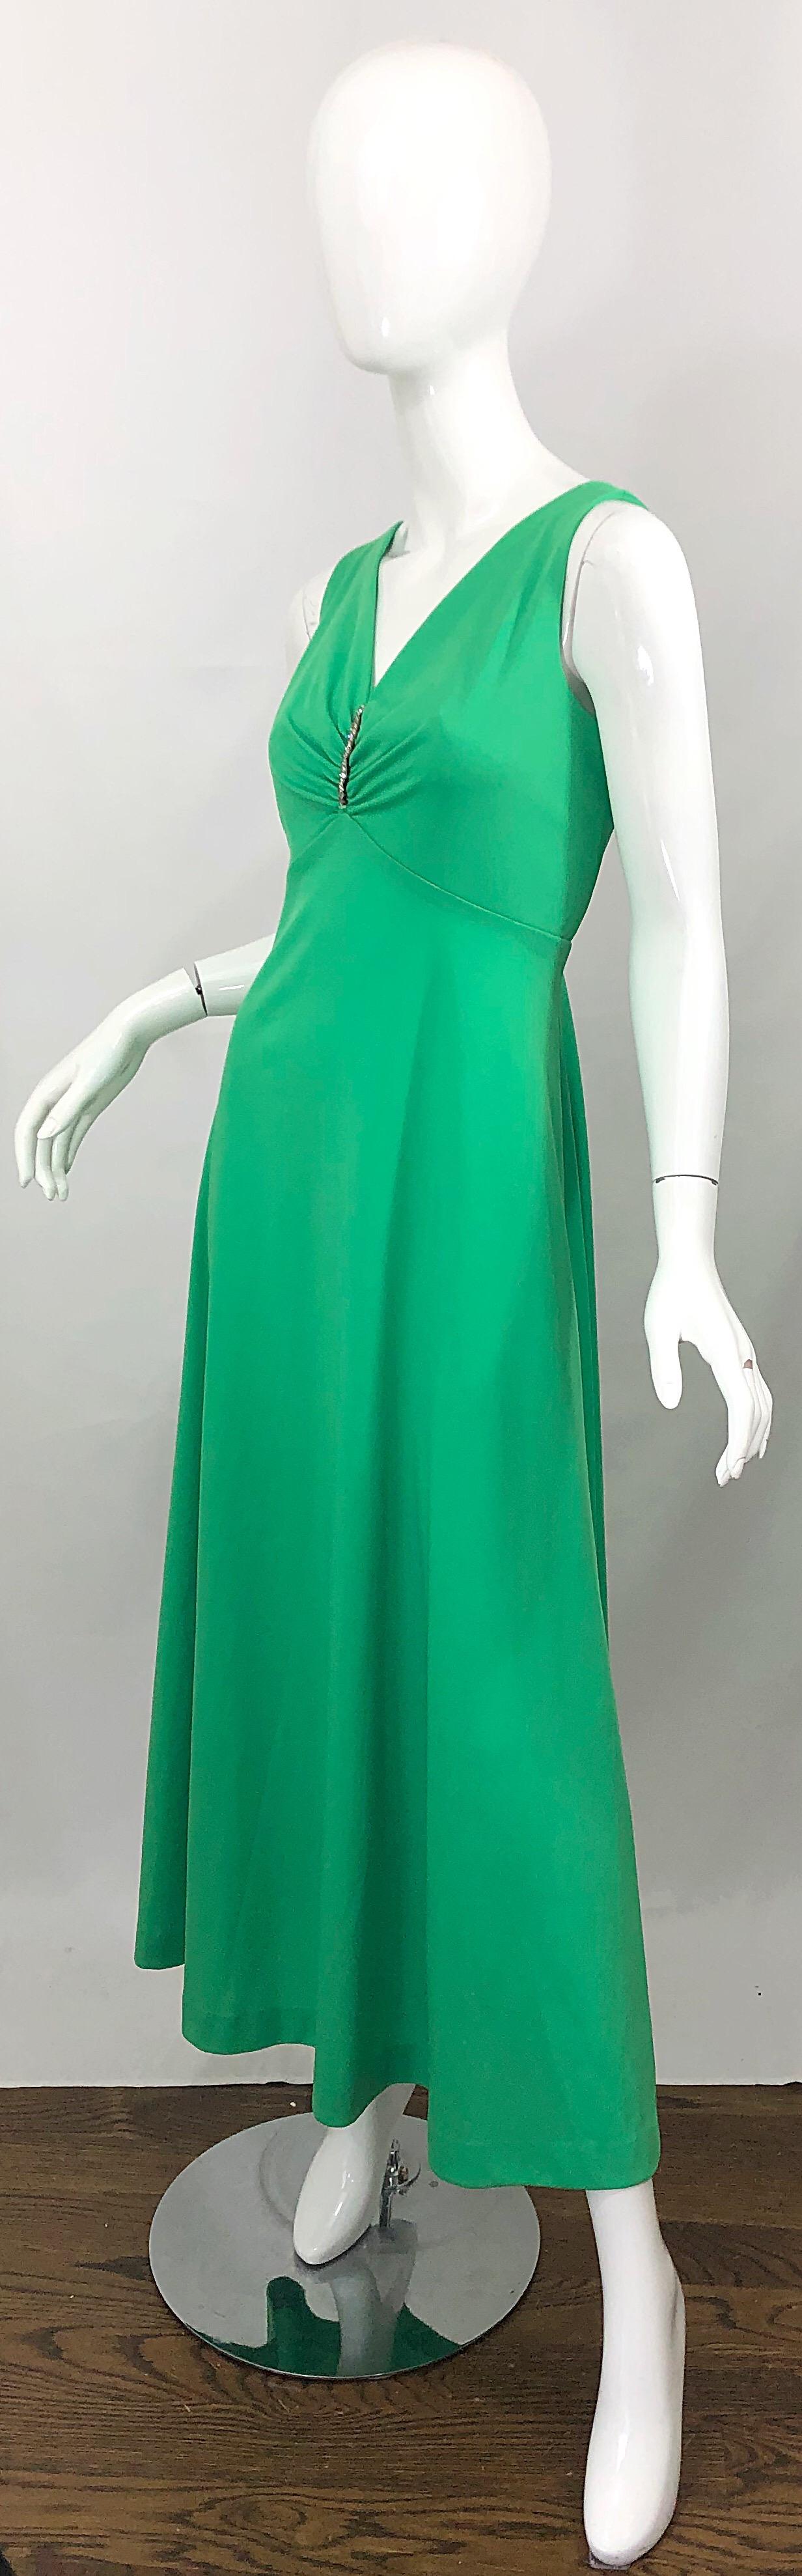 70s green dress